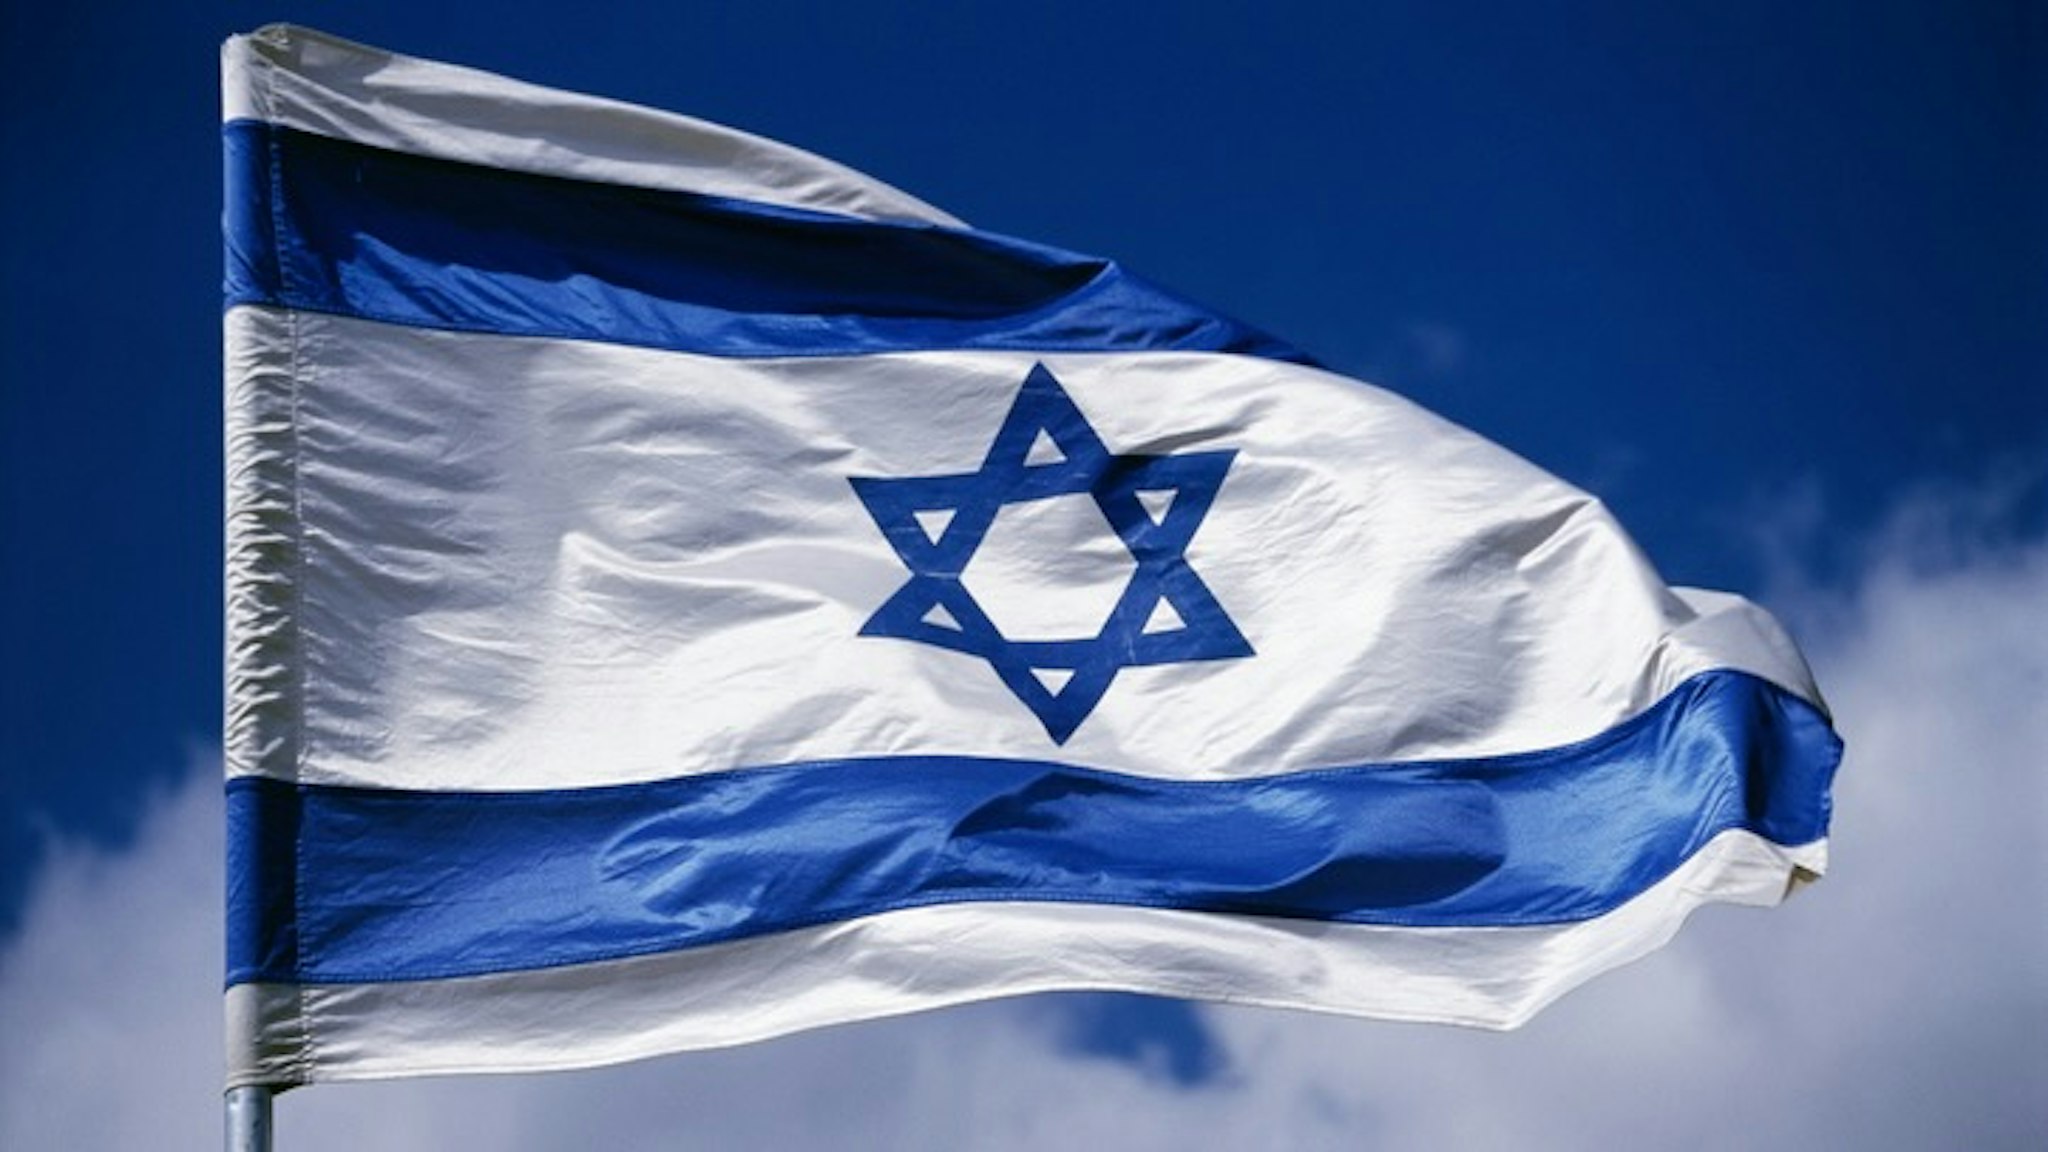 Israeli Flag - stock photo Carl & Ann Purcell via Getty Images